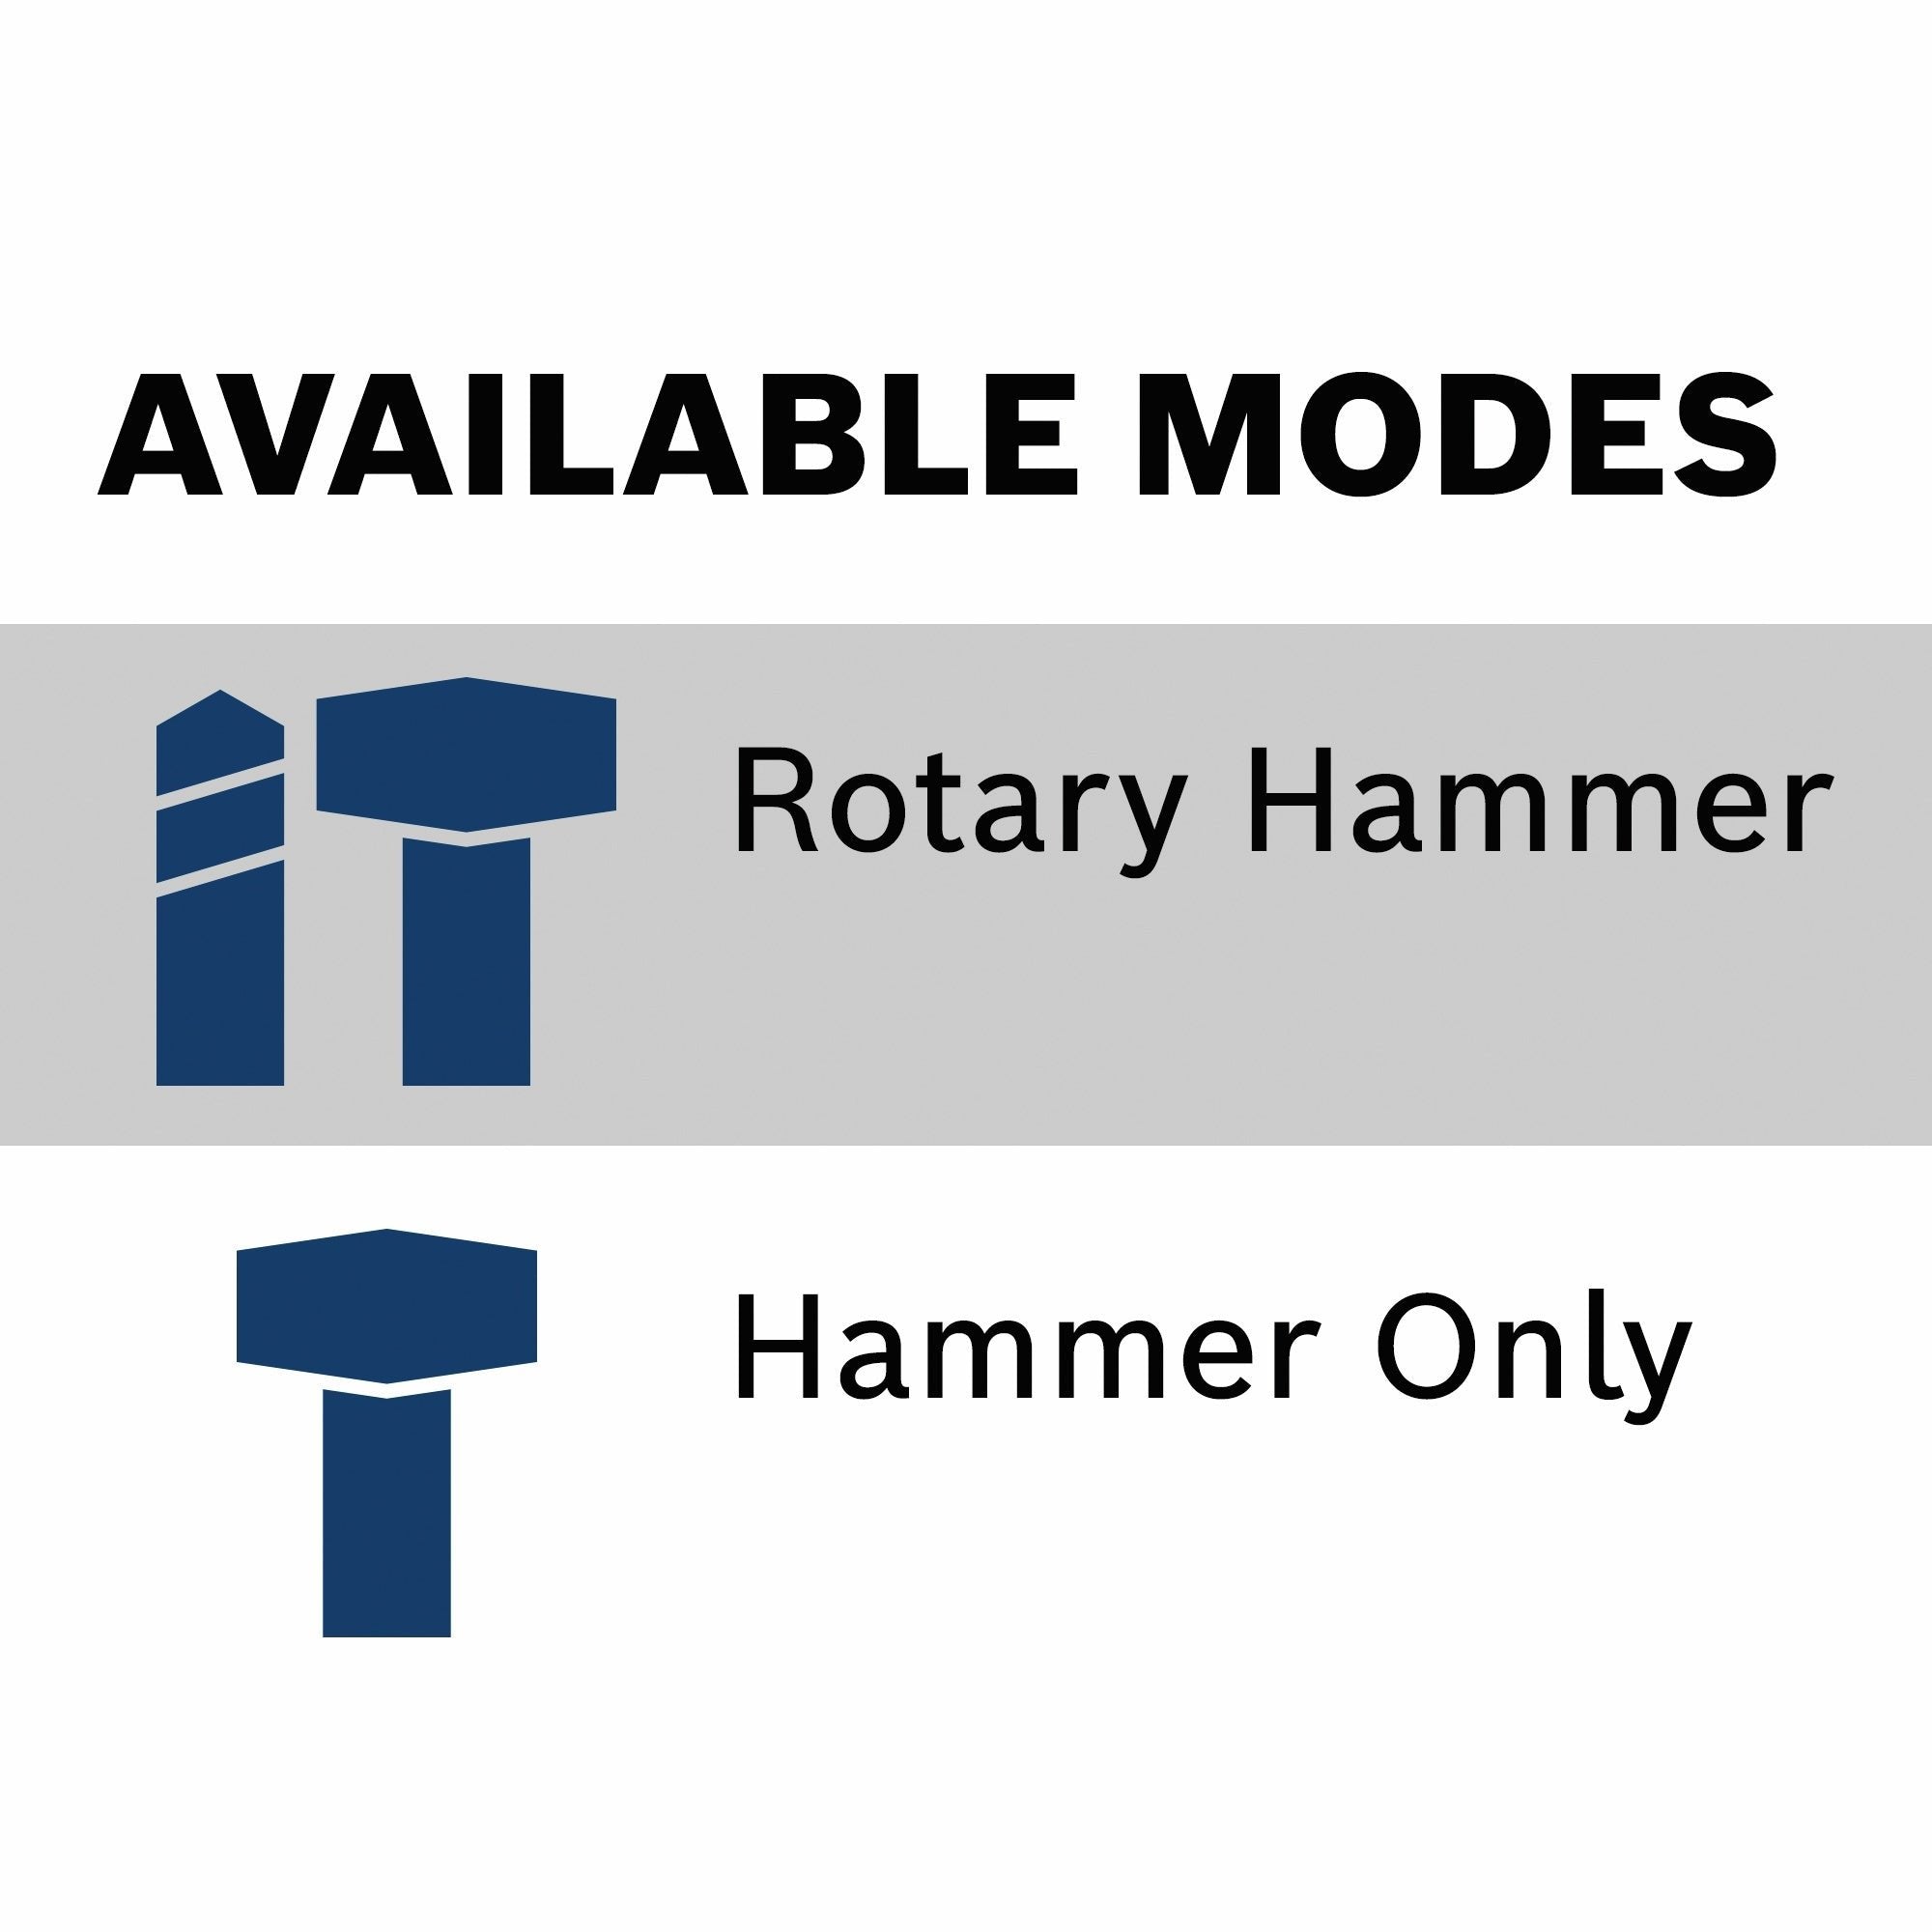 Bosch RH850VC  -  1-7/8 In. SDS-max® Rotary Hammer